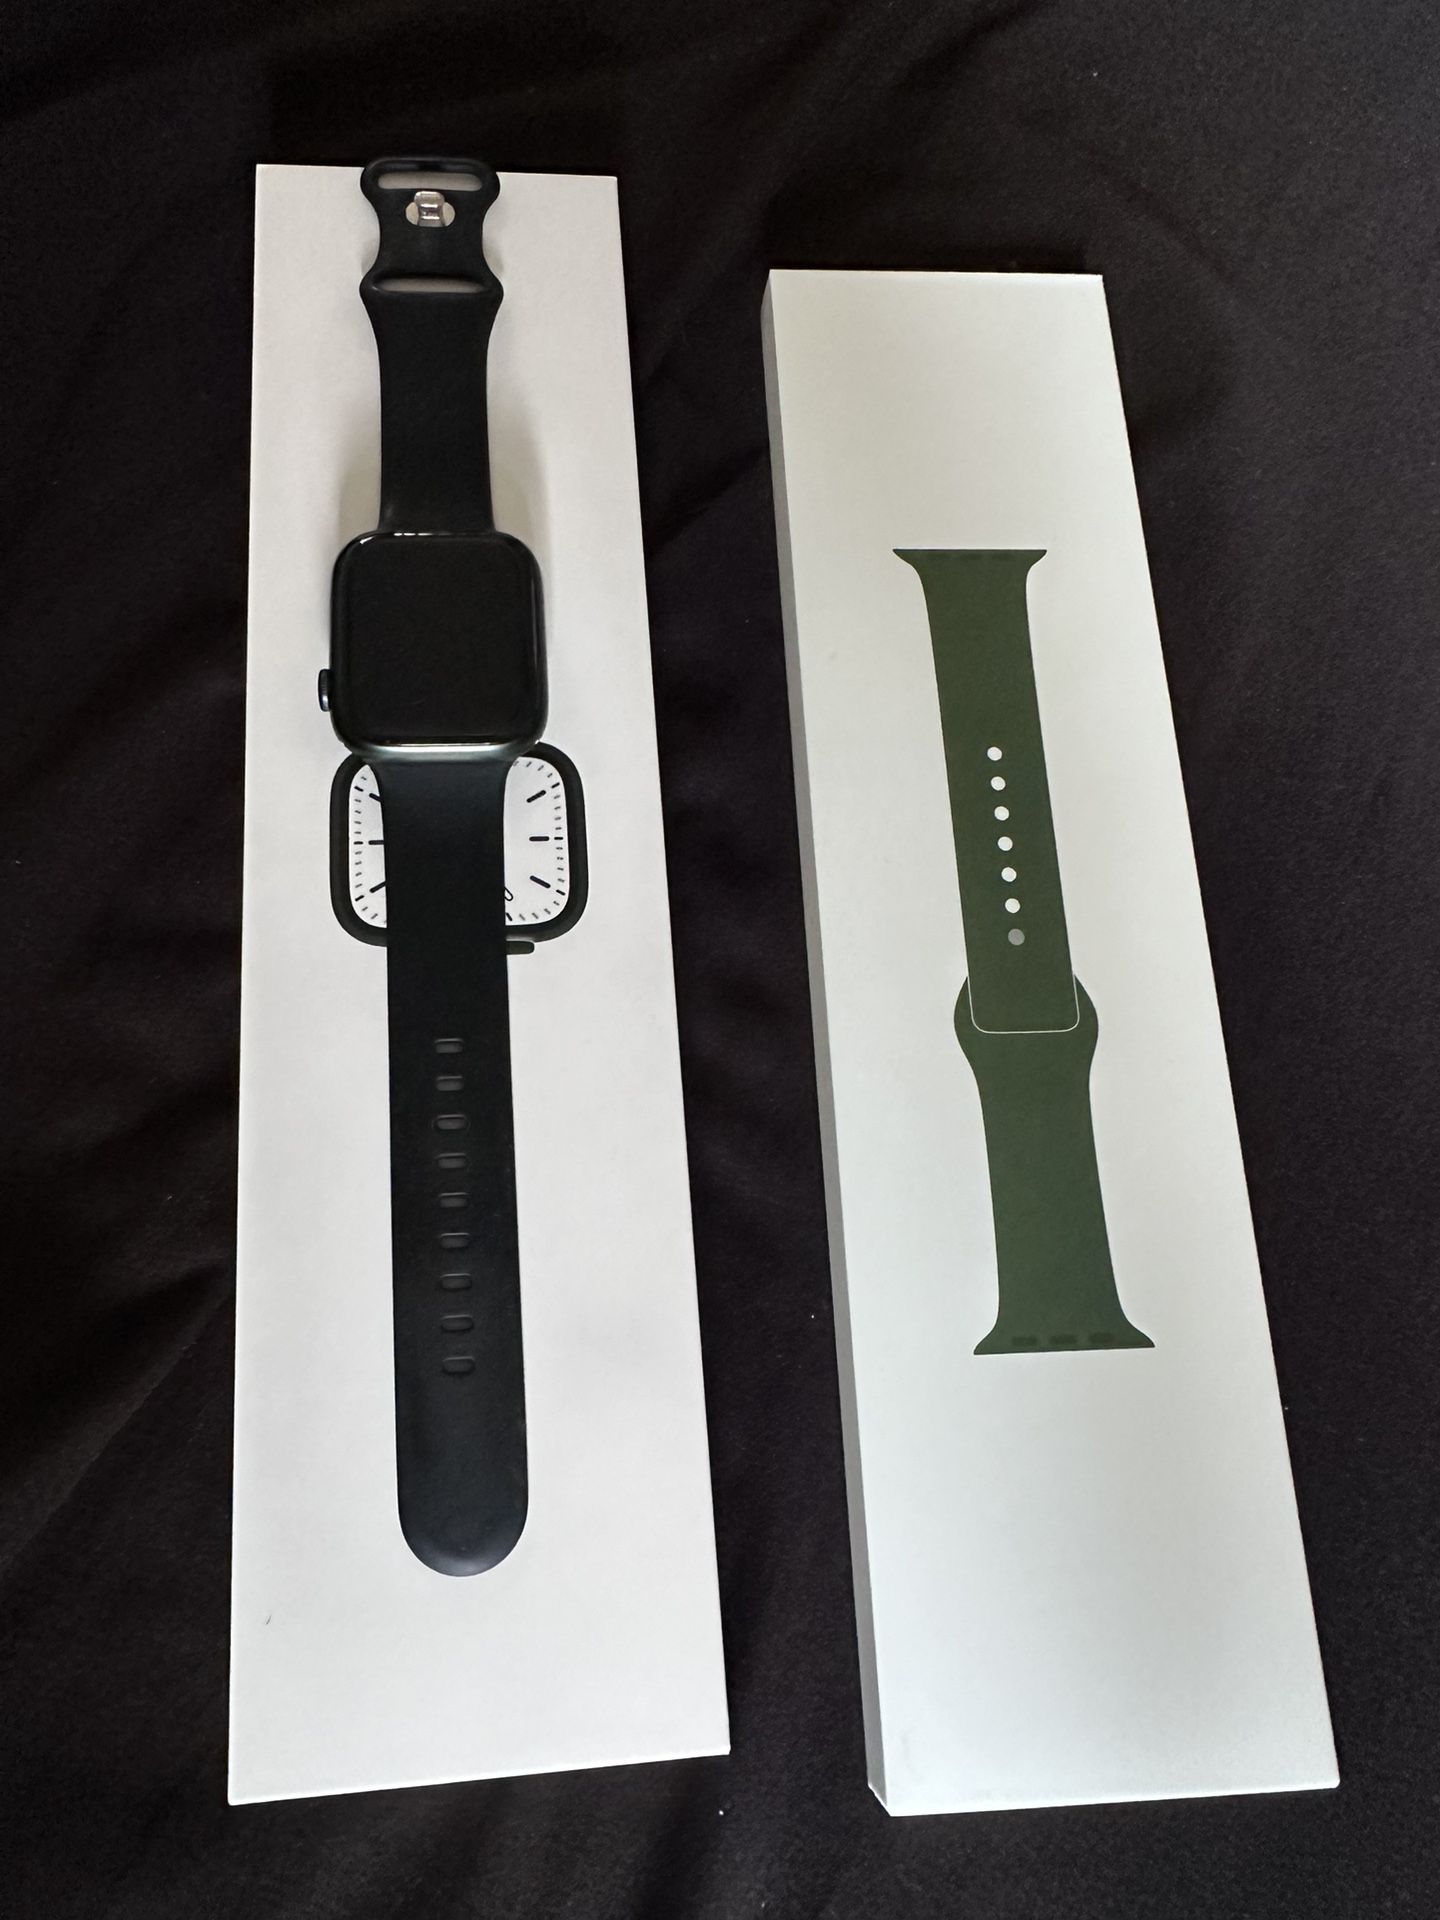 Series 7 45mm Apple Watch